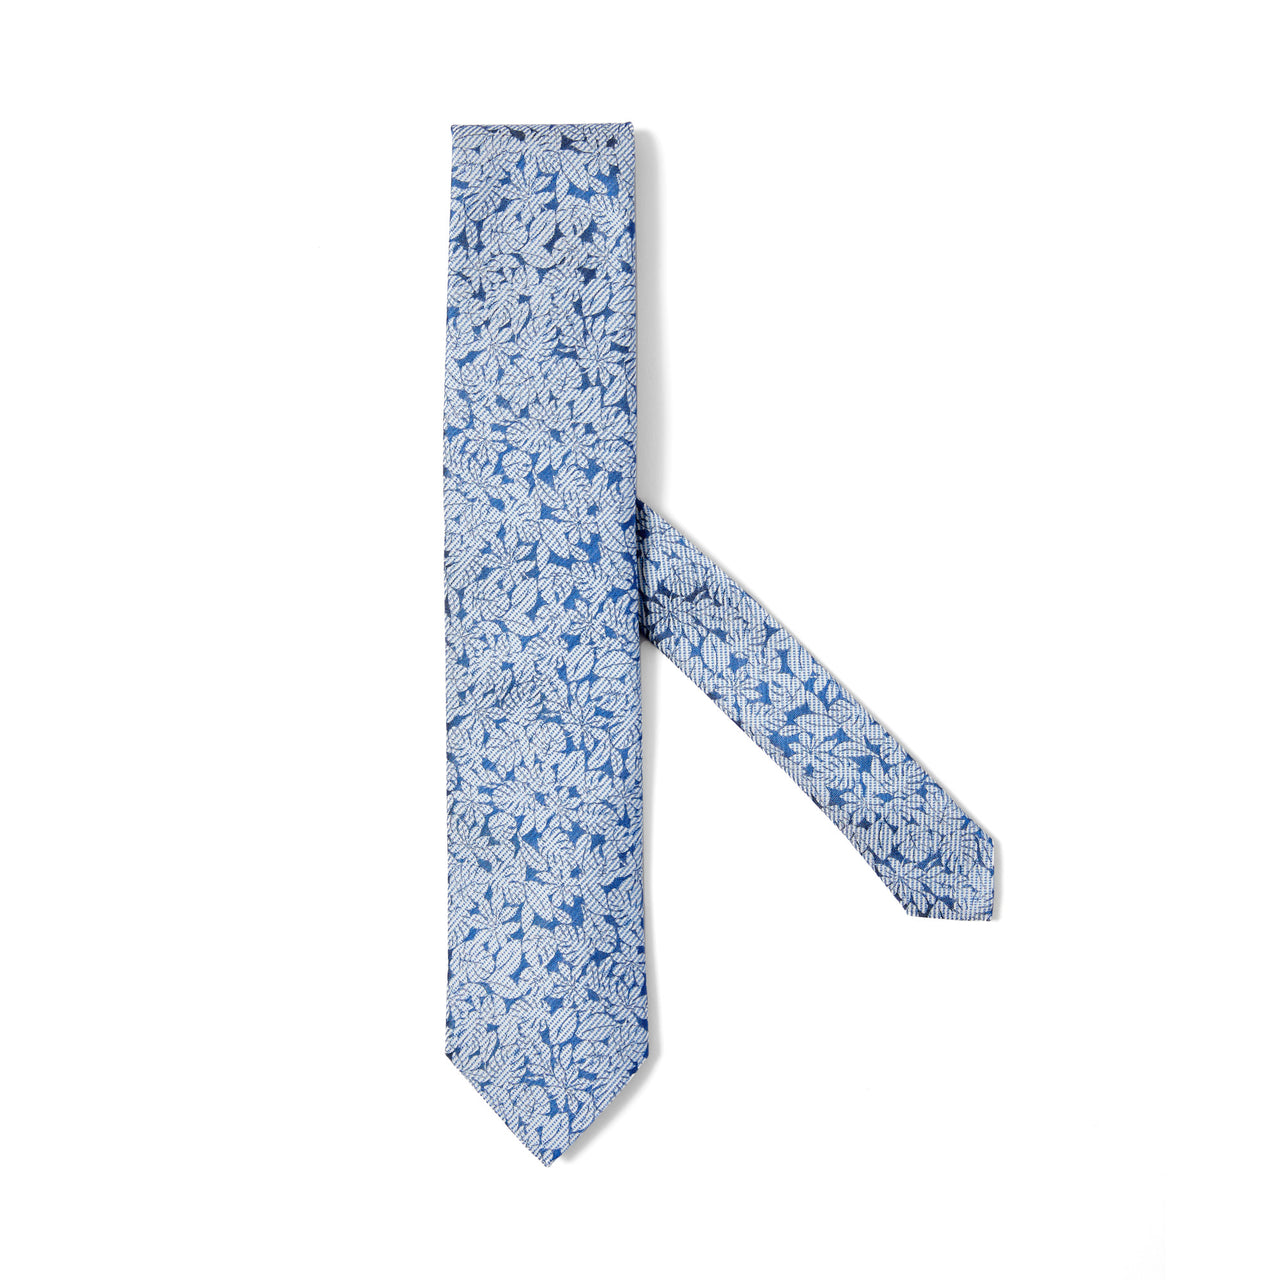 ERMENEGILDO ZEGNA Printed Seersucker Tie LIGHT BLUE